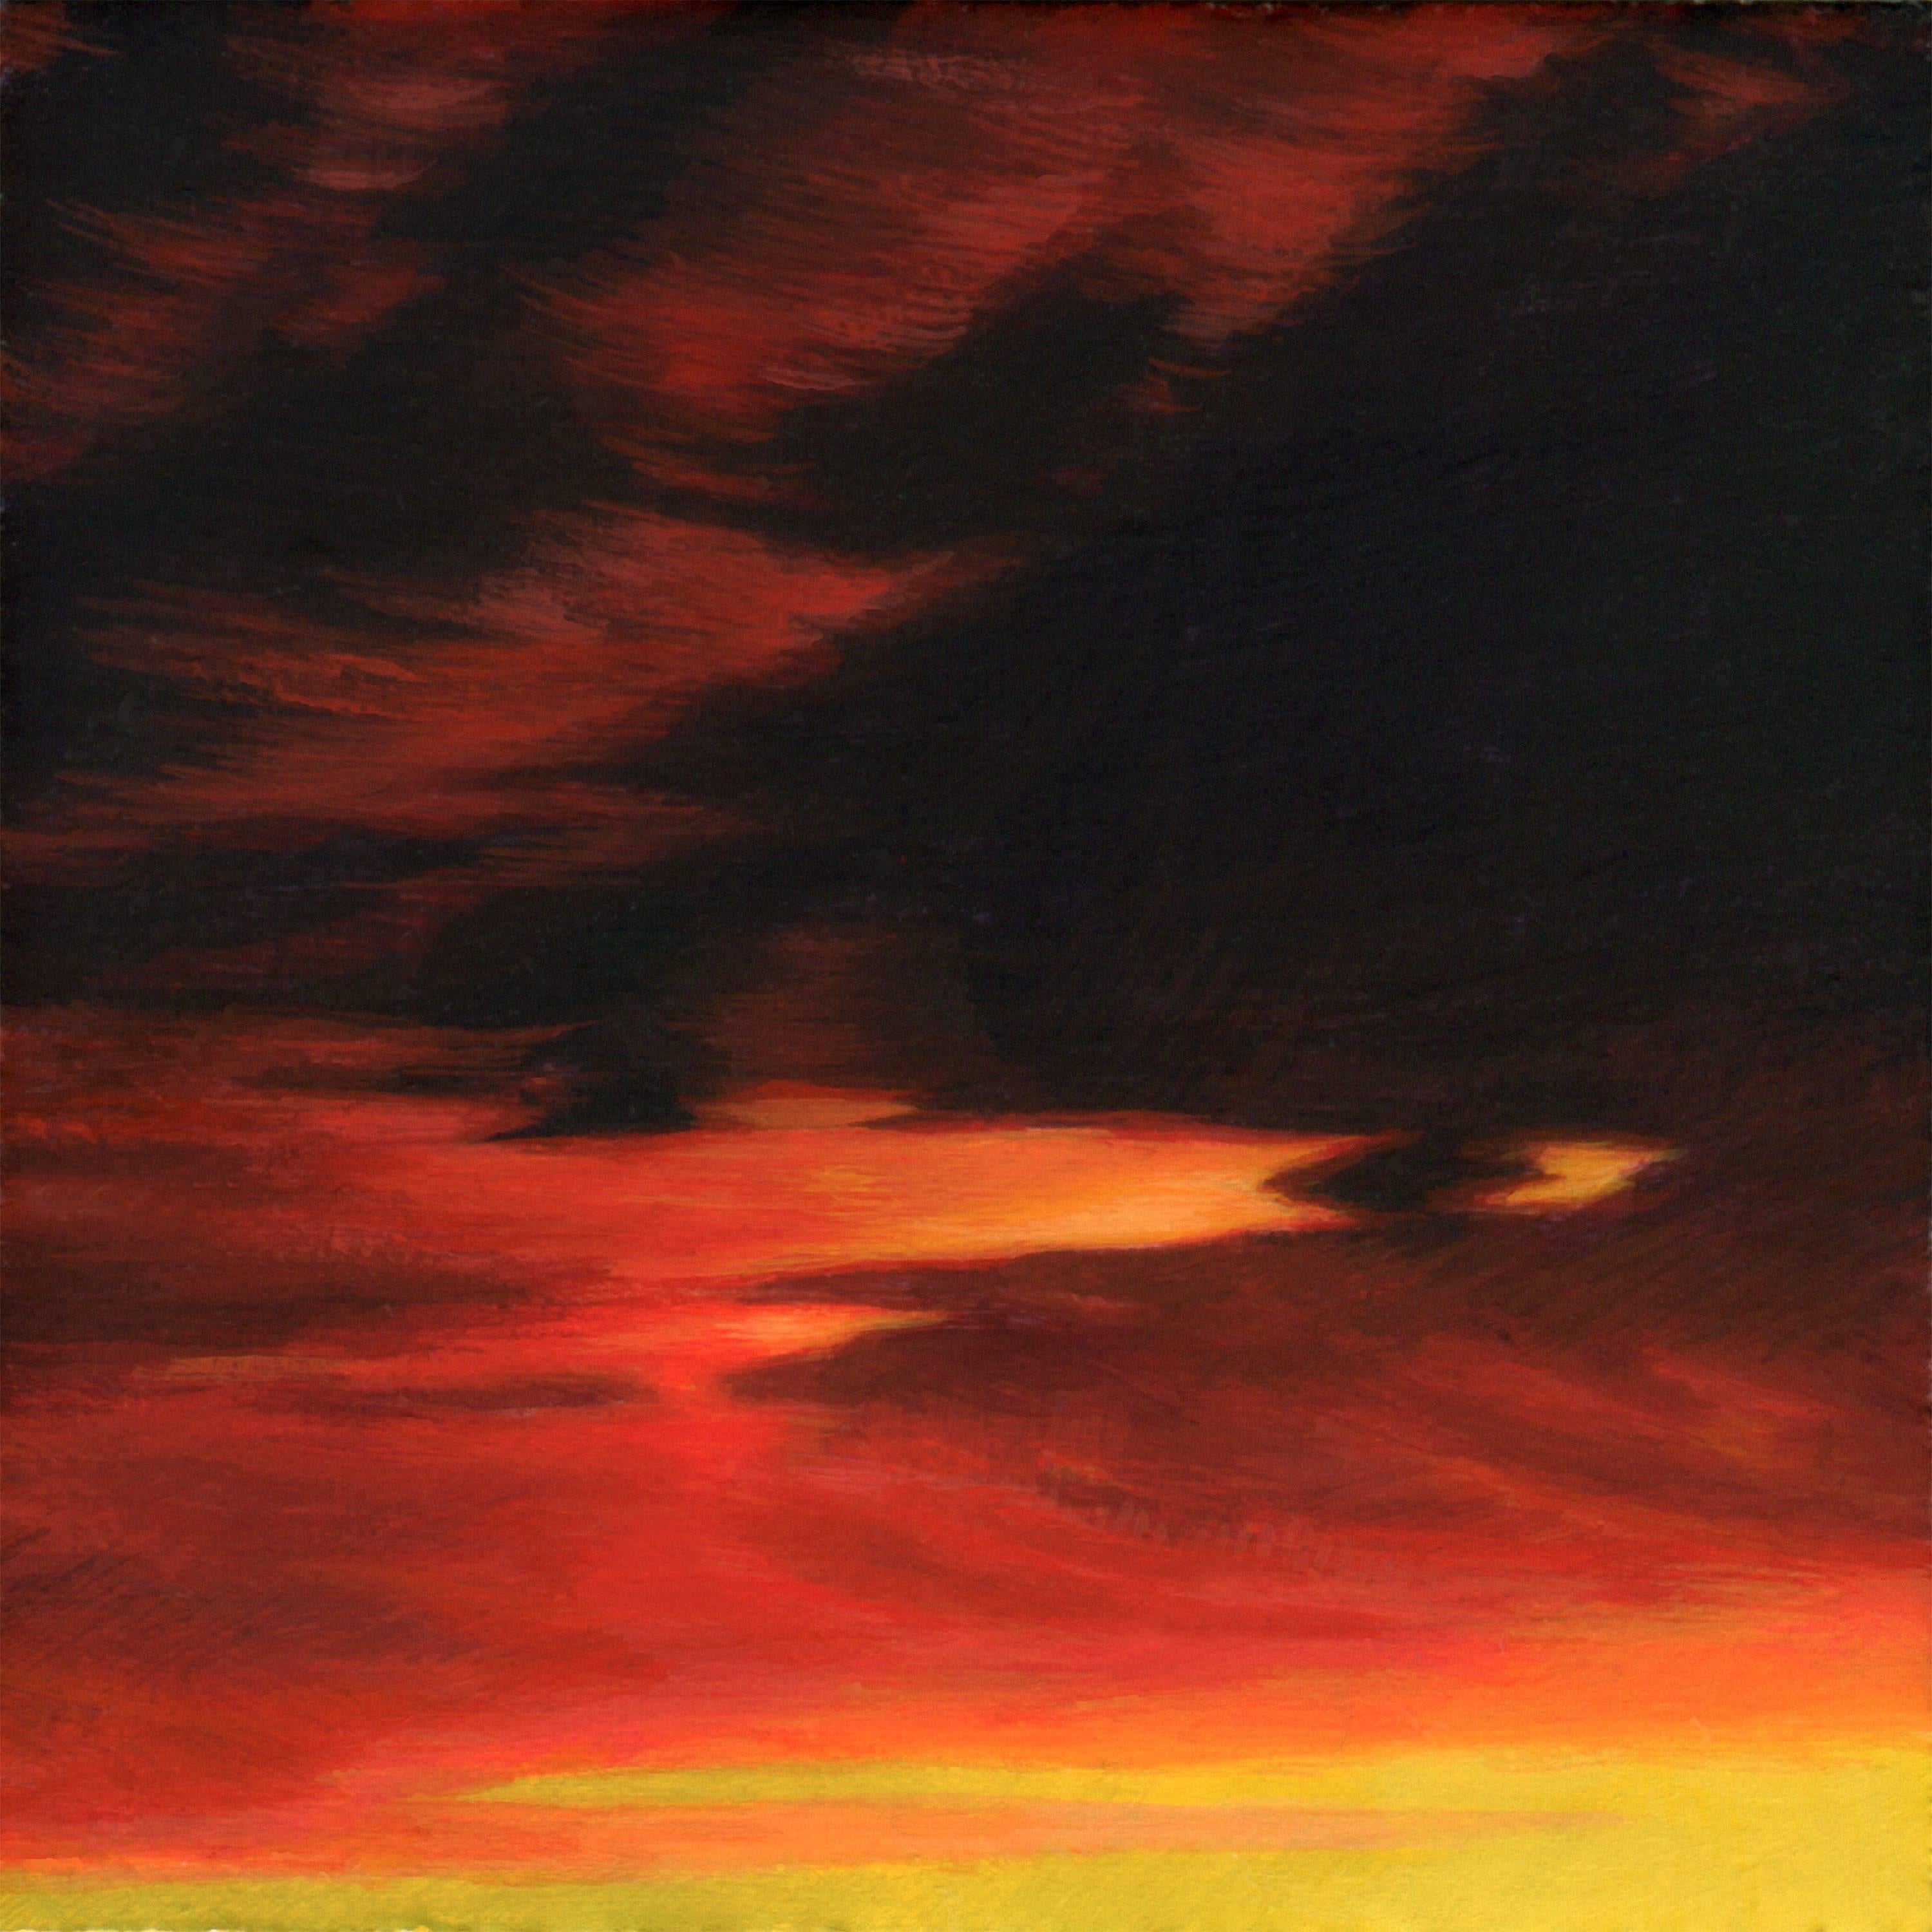 Sky in the Morning (deux jours deux) - Painting de Adam Mysock